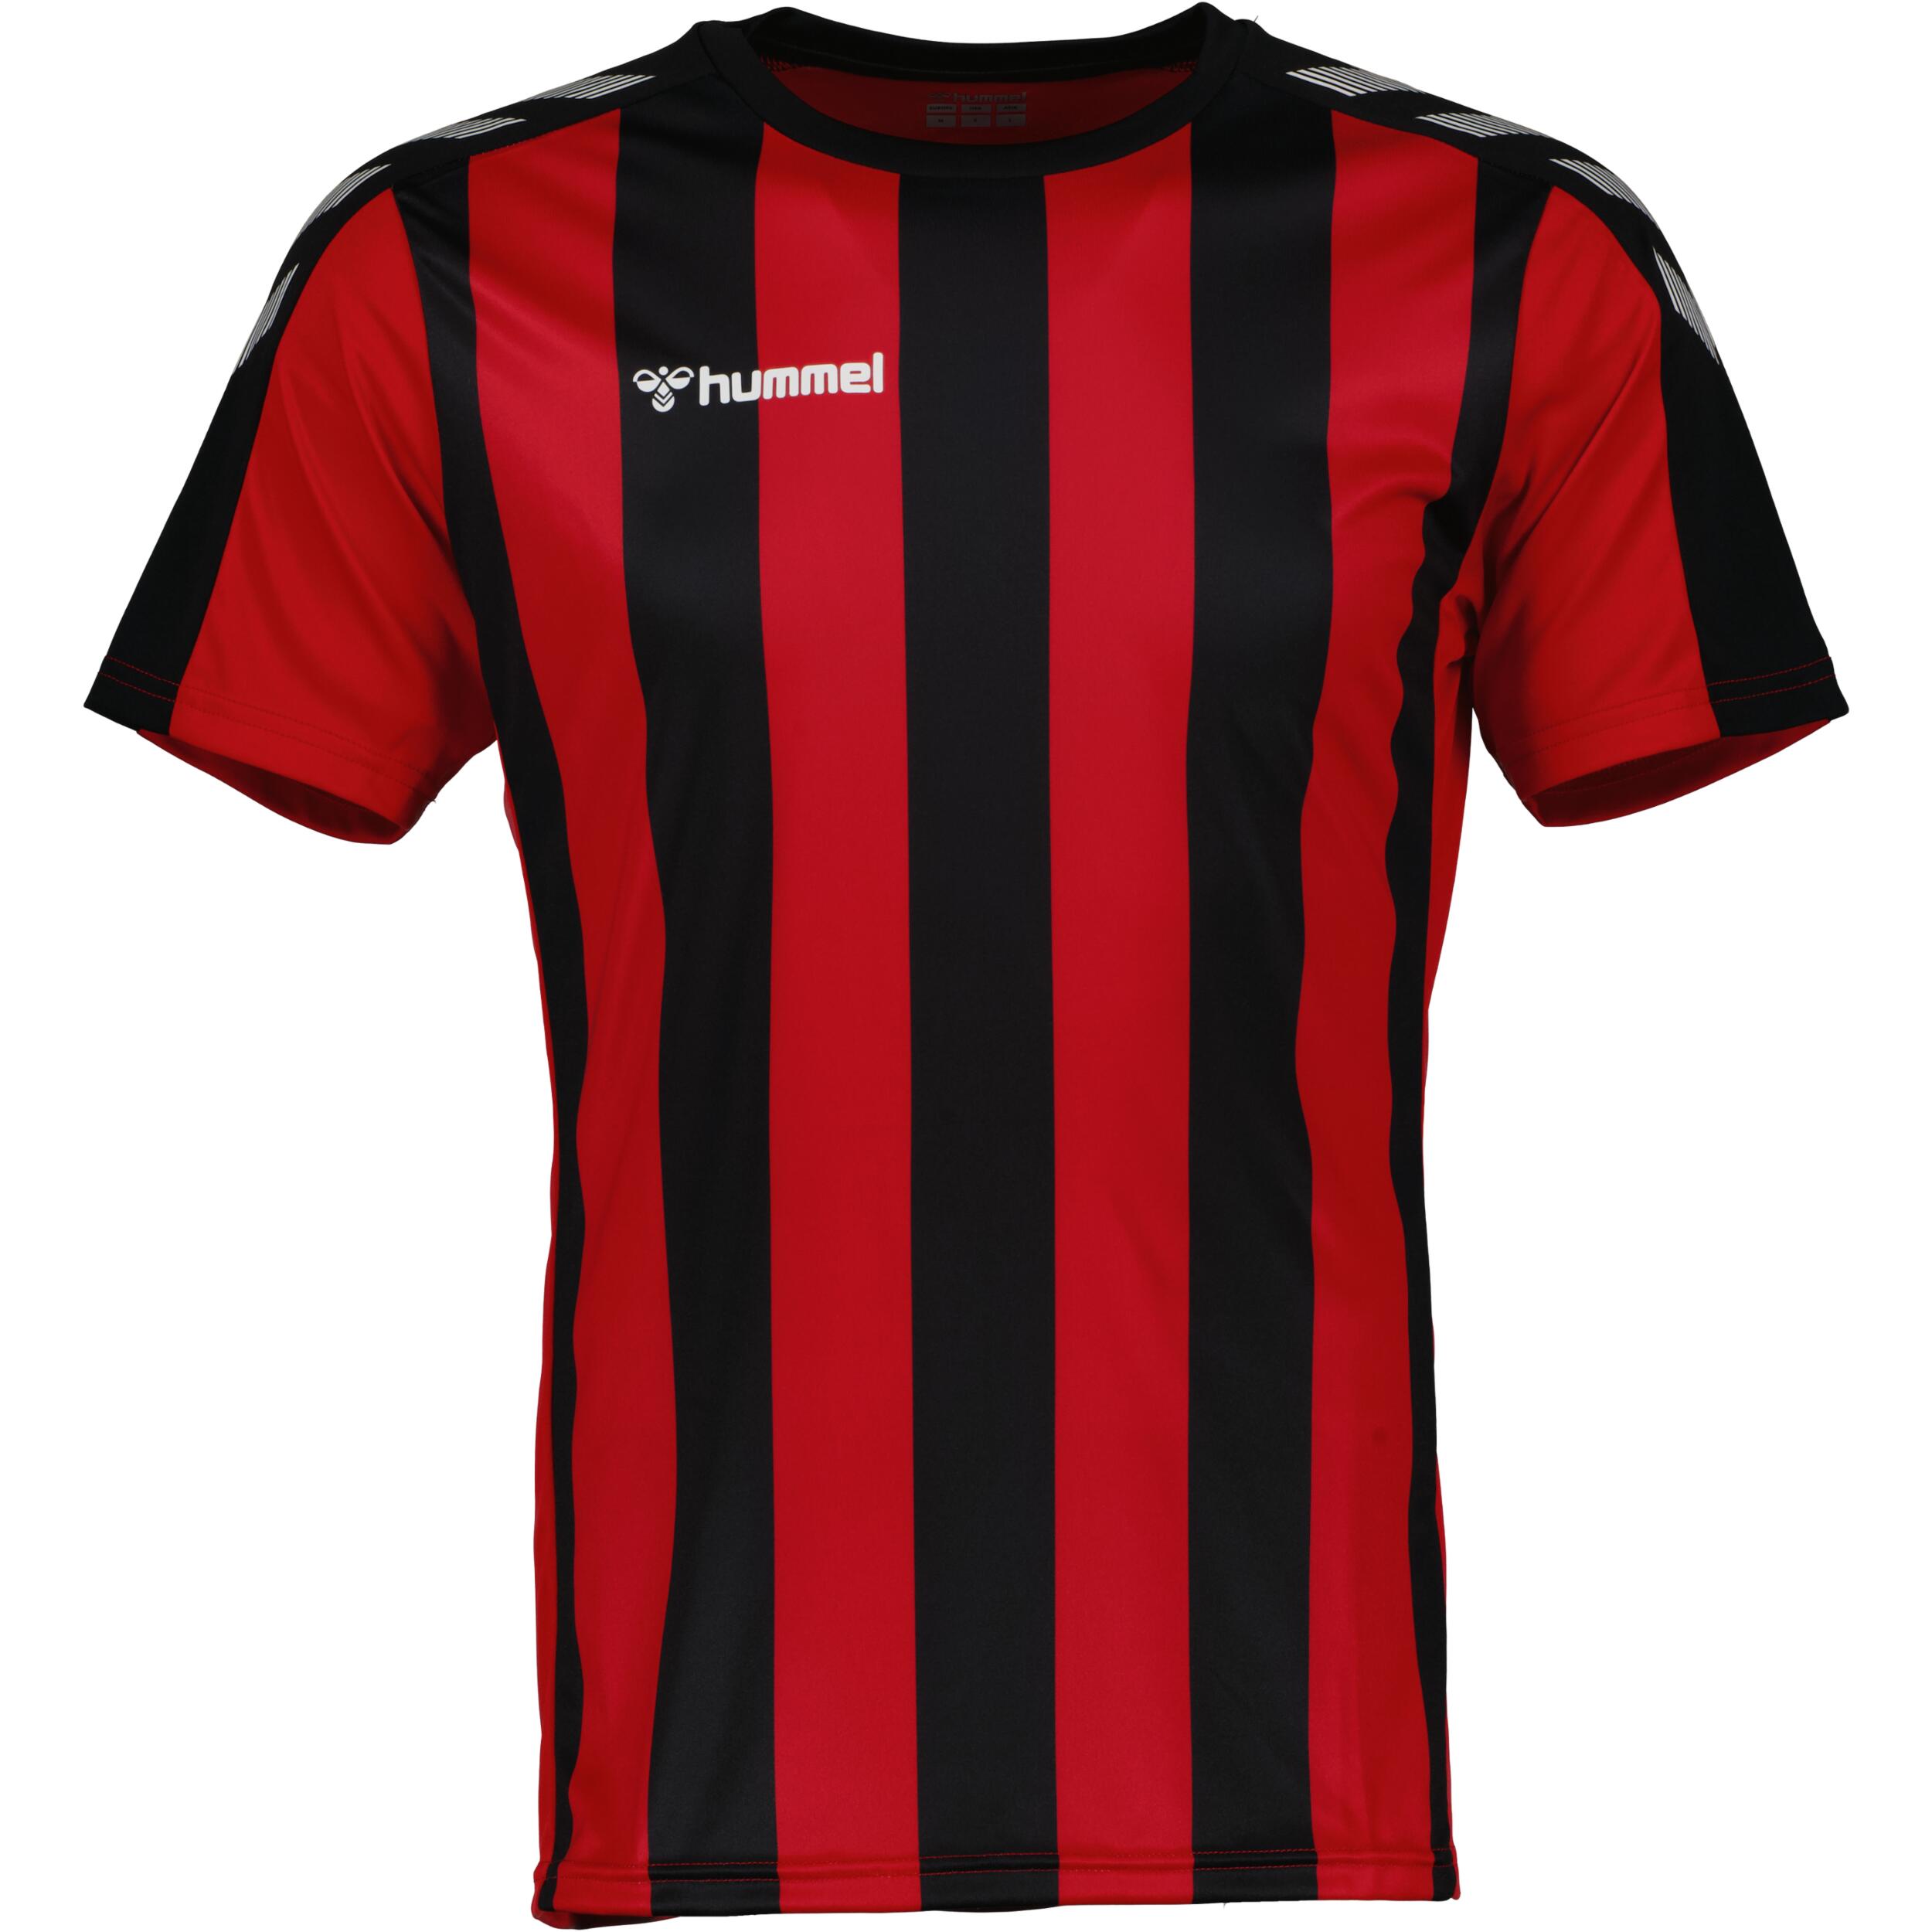 HUMMEL Stripe jersey for men, great for football,  in black/true red